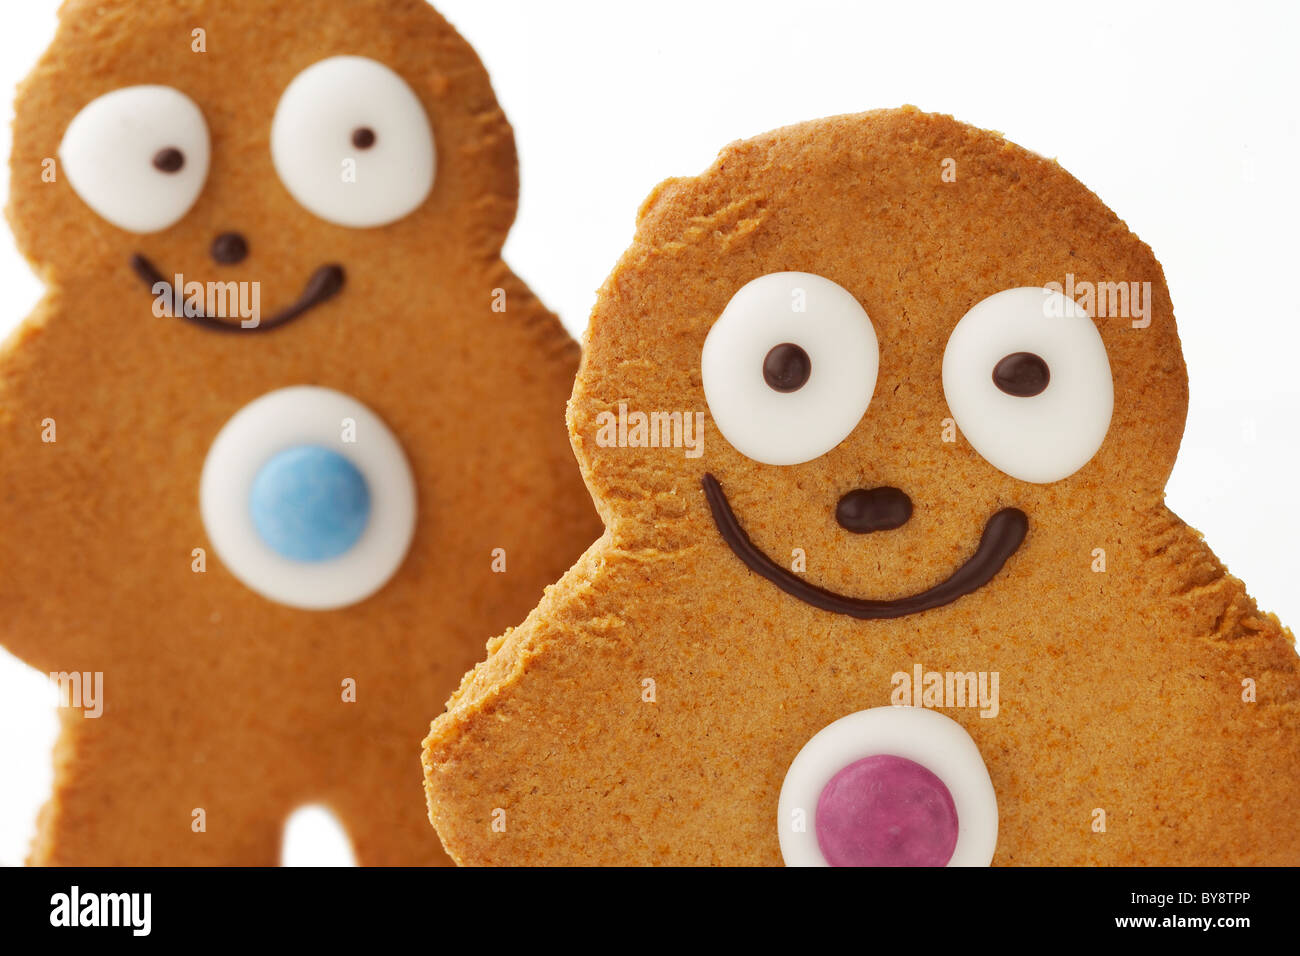 Gingerbread men/biscuits Stock Photo